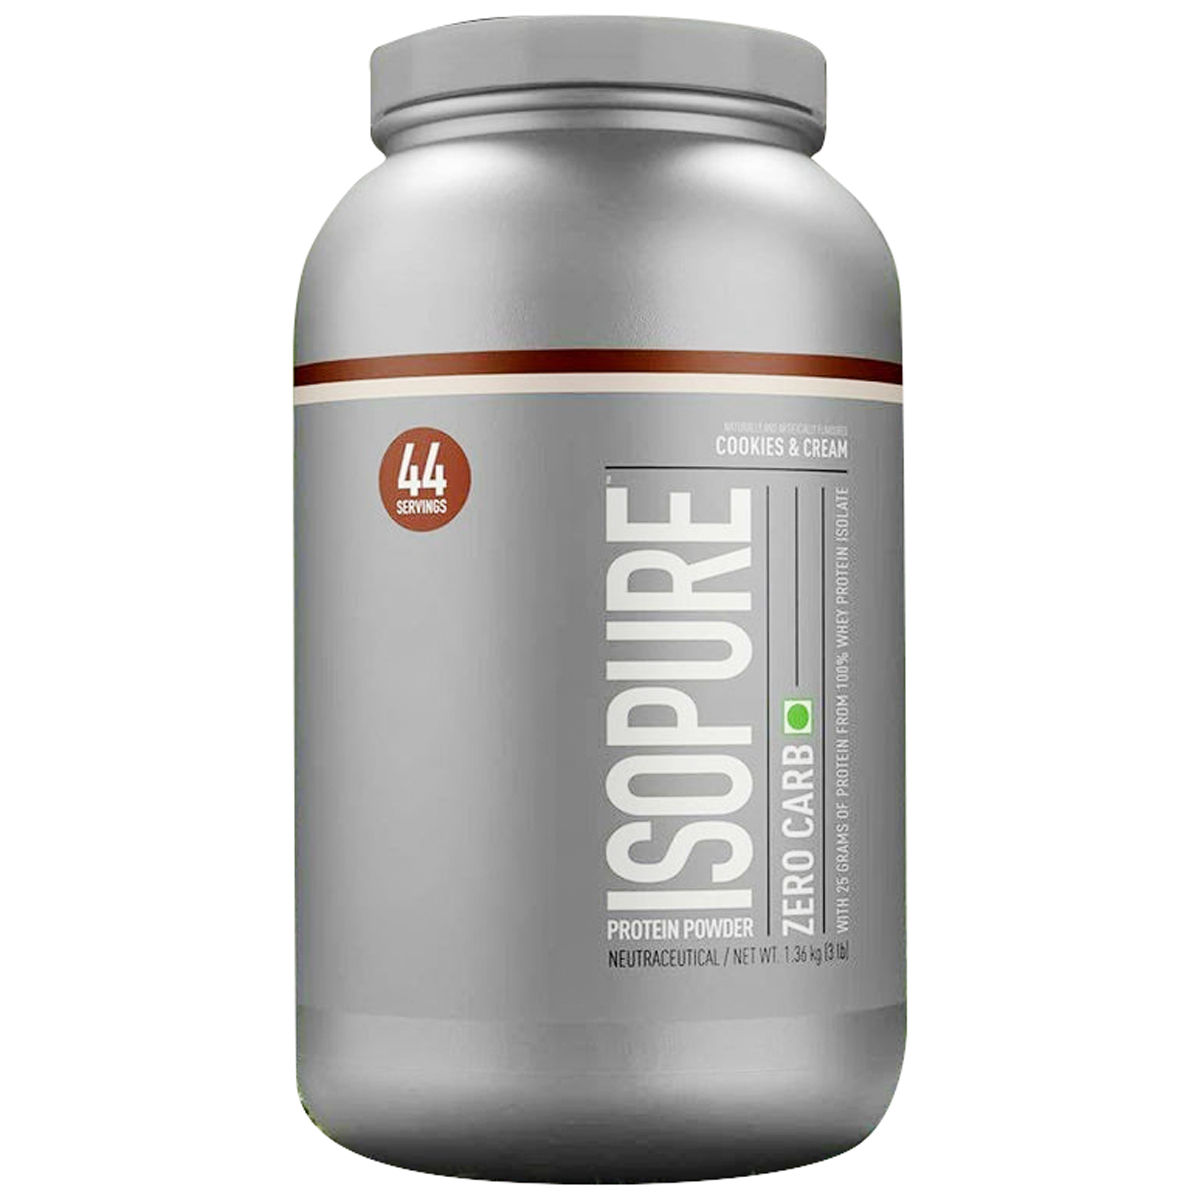 Buy Isopure Zero Carb 100% Whey Protein Isolate Cookies & Cream Flavour Powder, 3 lb Online